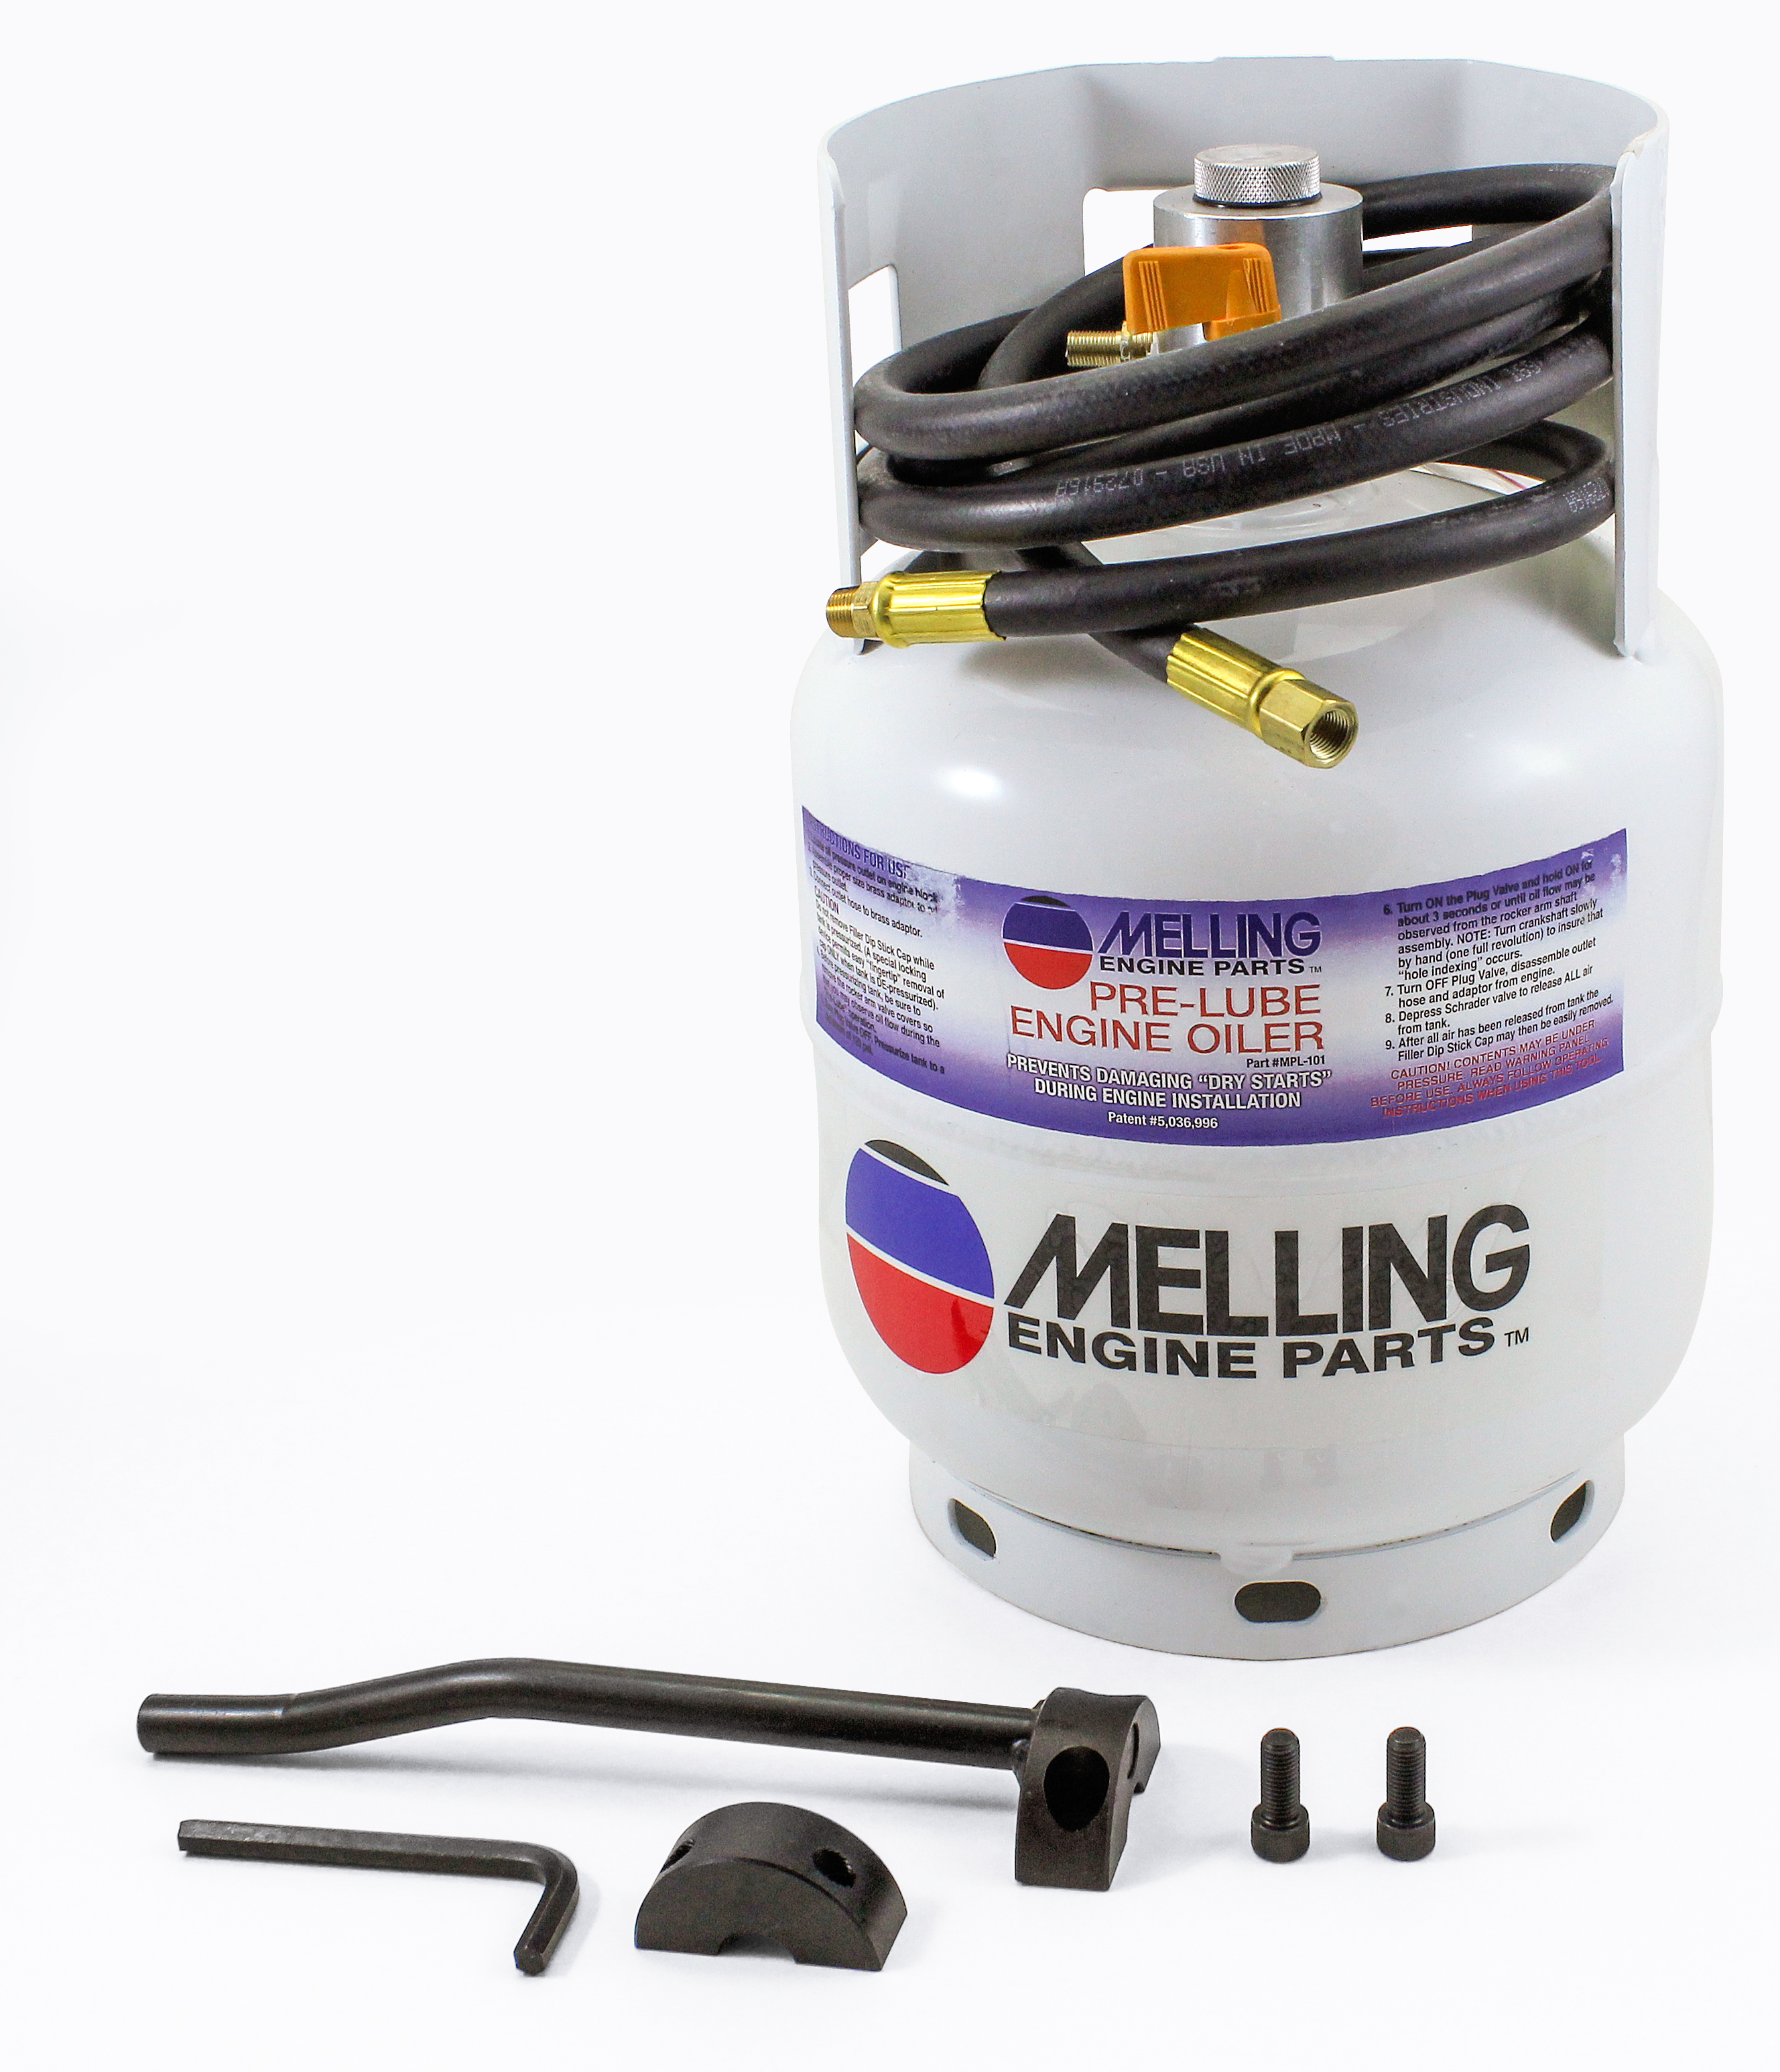 Oil Priming tool for Priming your Engine MPL101-NAP 